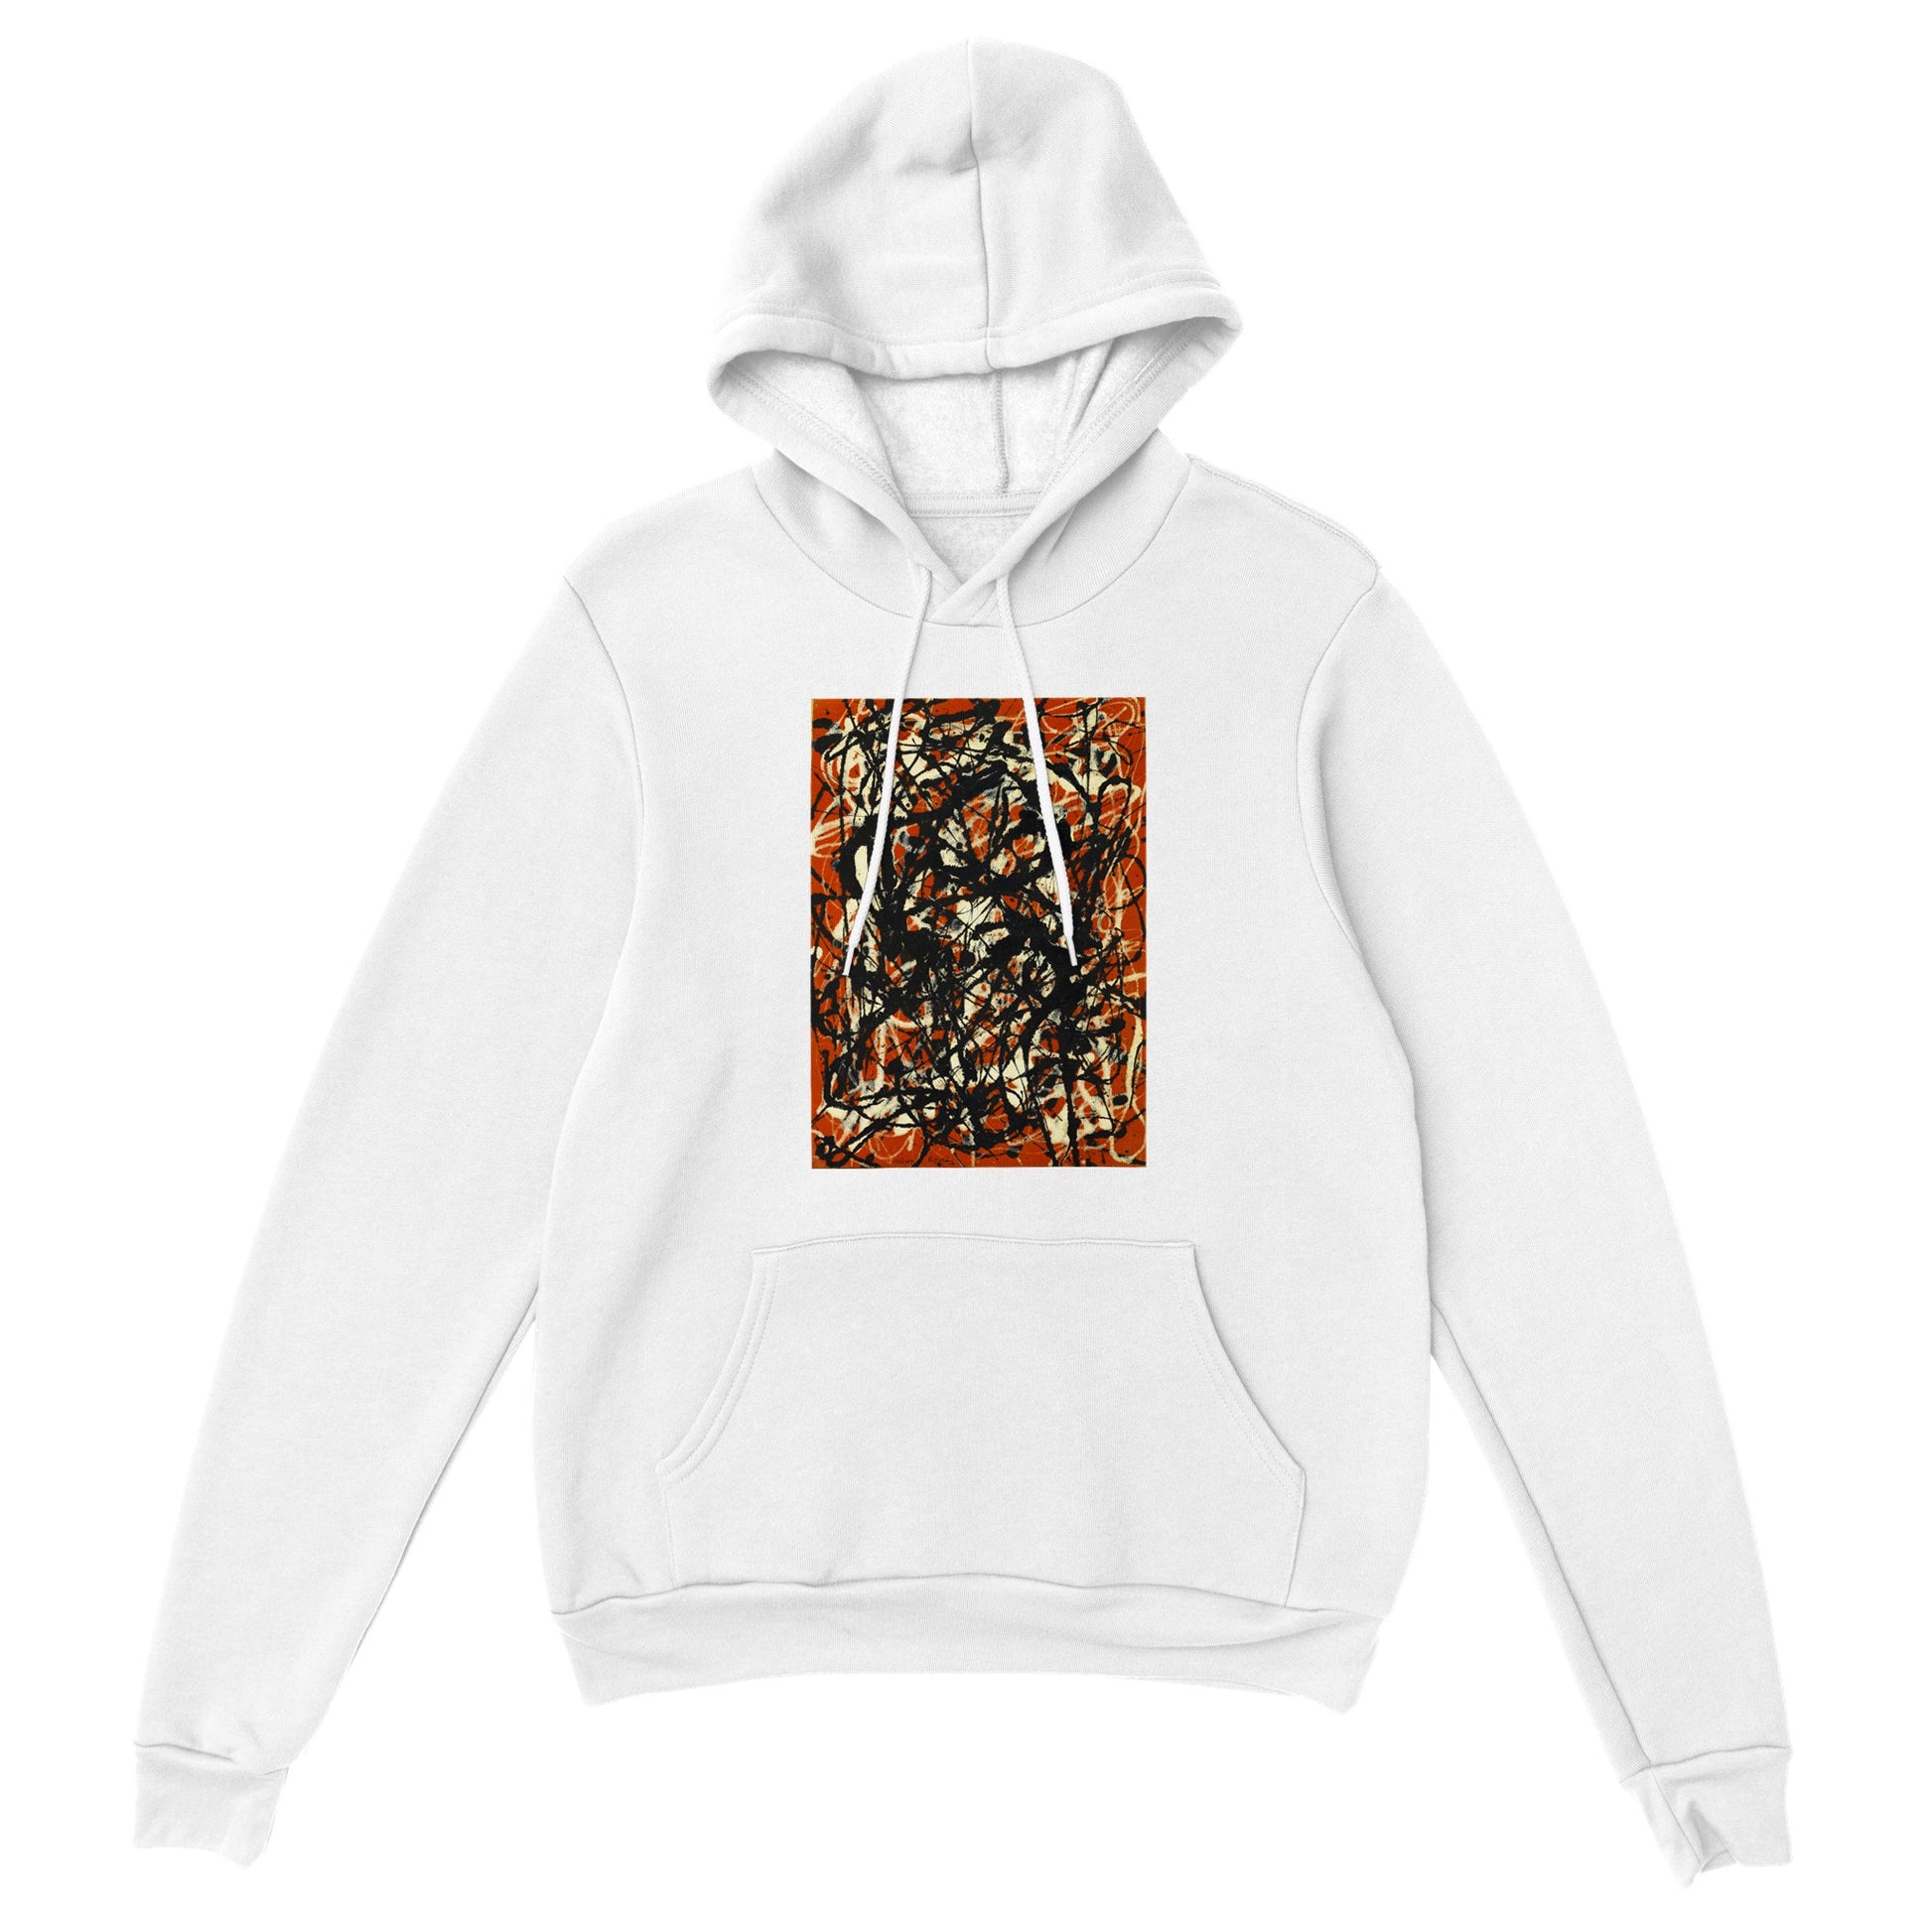 Jackson Pollock hoodie